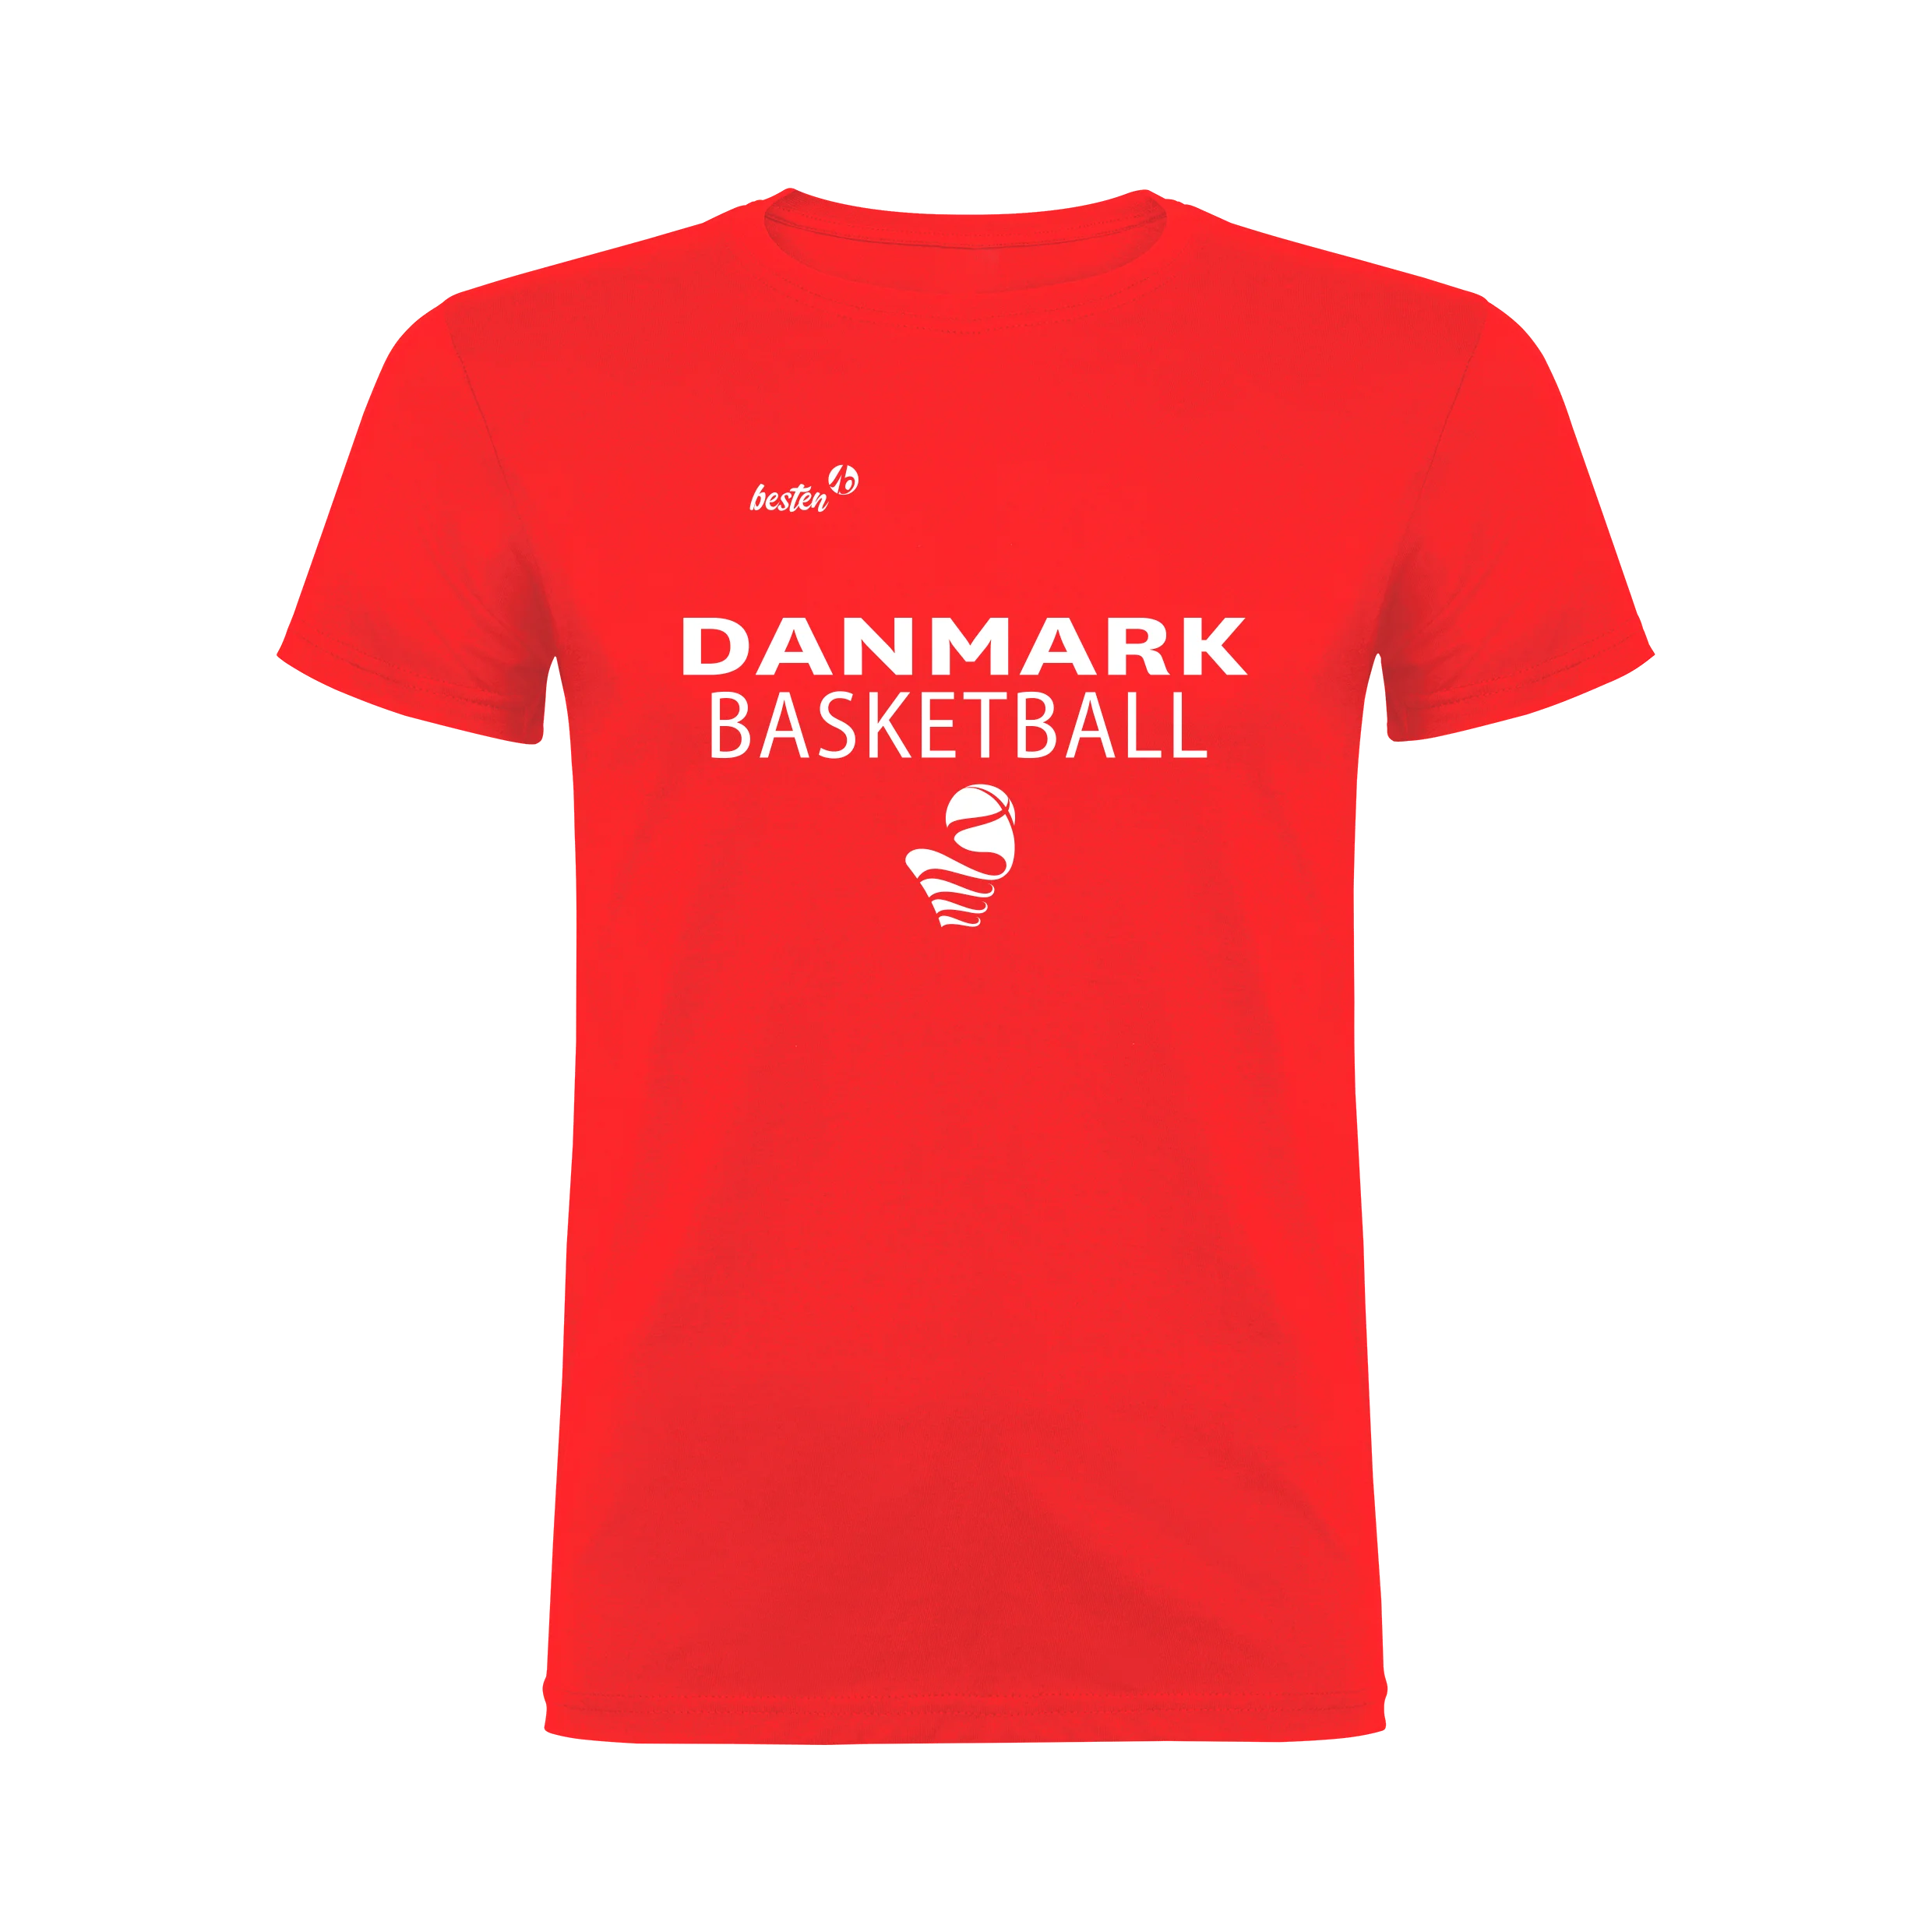 Dinamarca Merchandising camiseta baloncesto